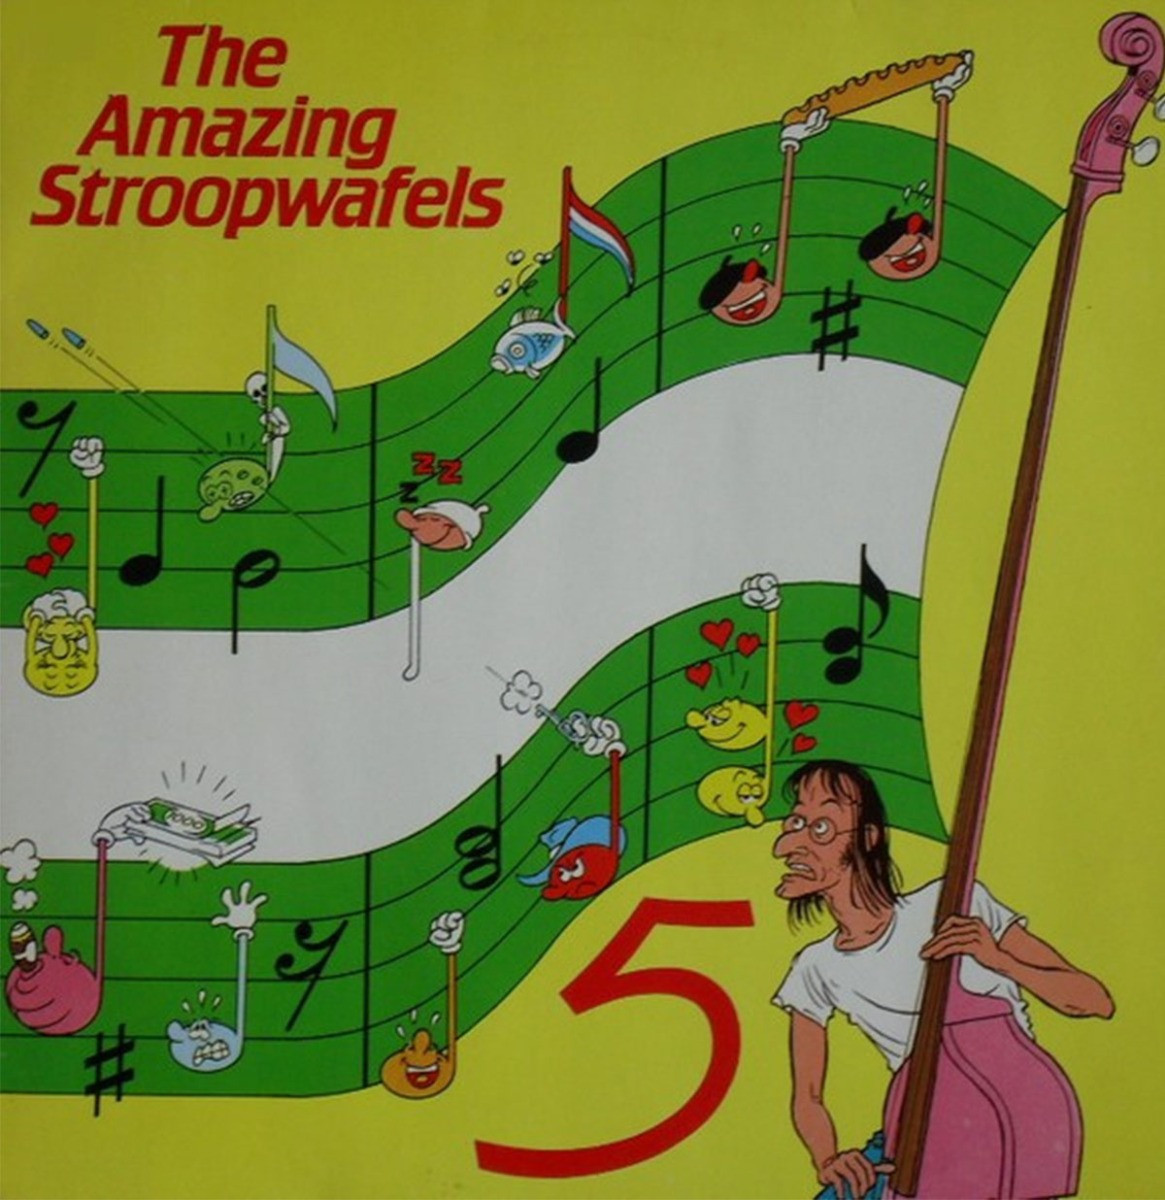 The Amazing Stroopwafels - 5 LP